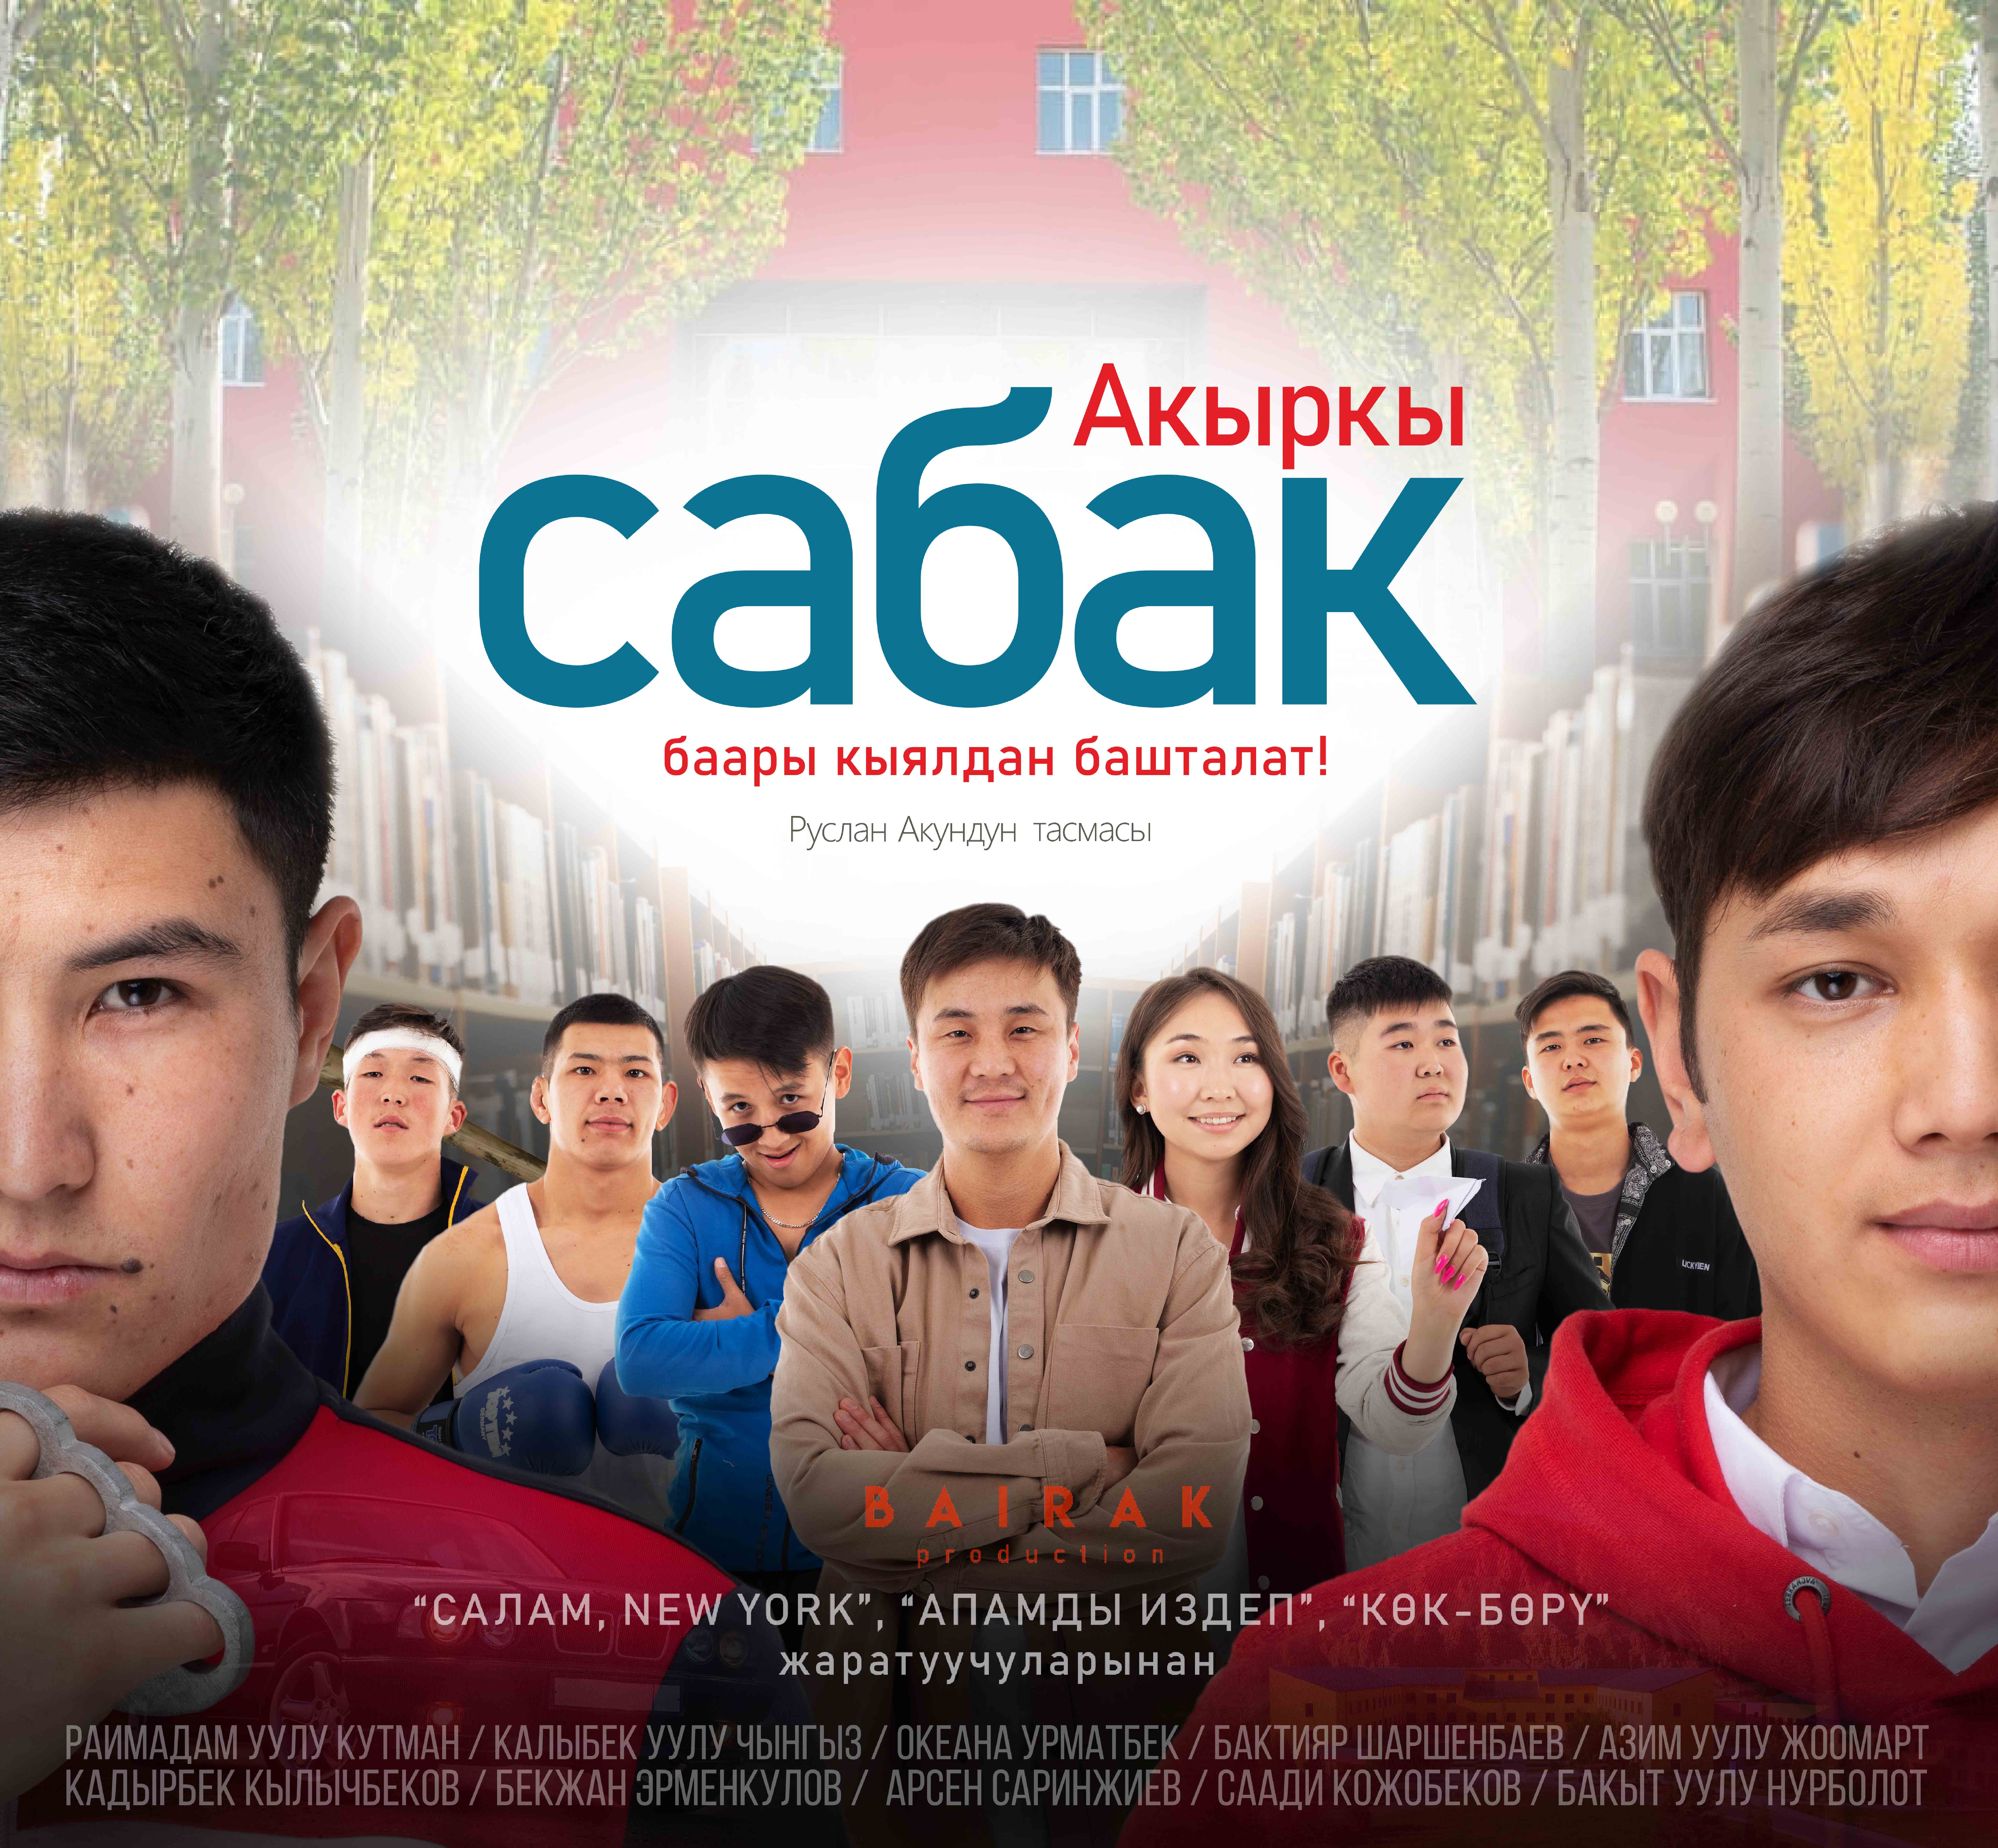 Sabak (2)